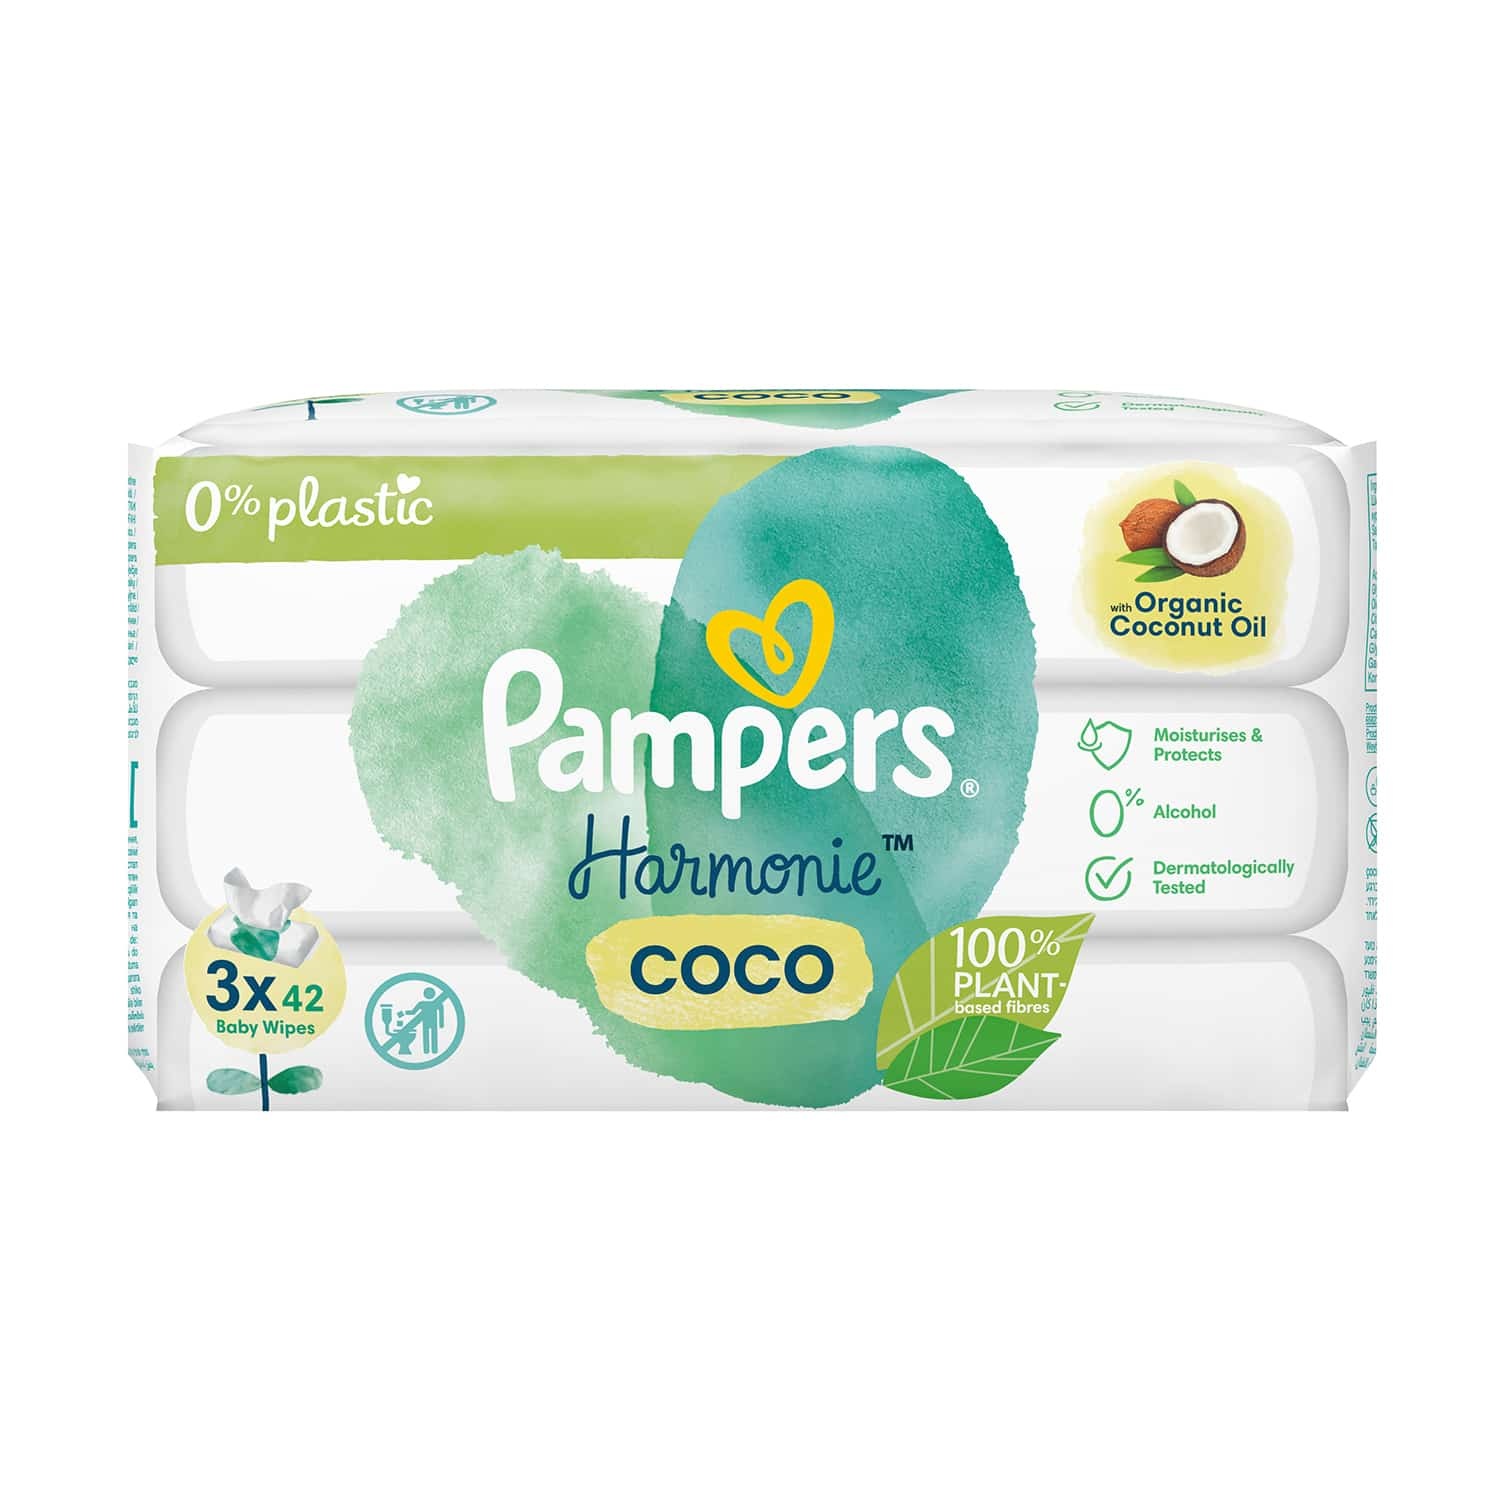 Voordeeldrogisterij Pampers Harmonie Kokosnoot 0% plastic babydoekjes - 126 stuks aanbieding